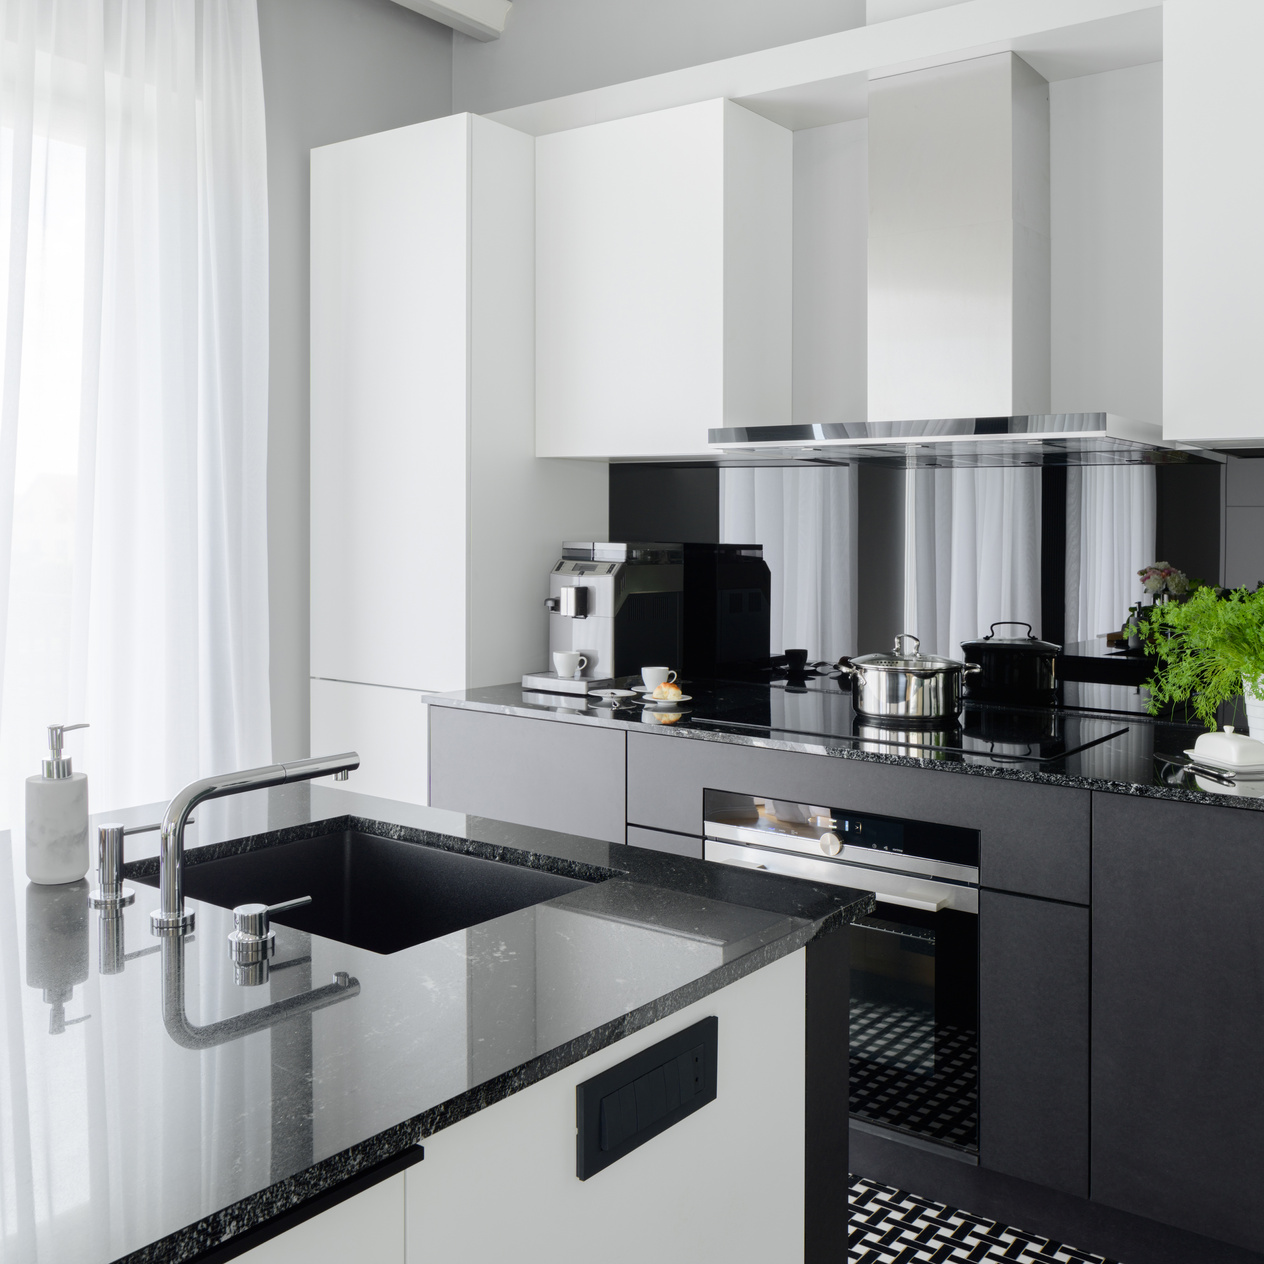 Fancy black and white kitchen